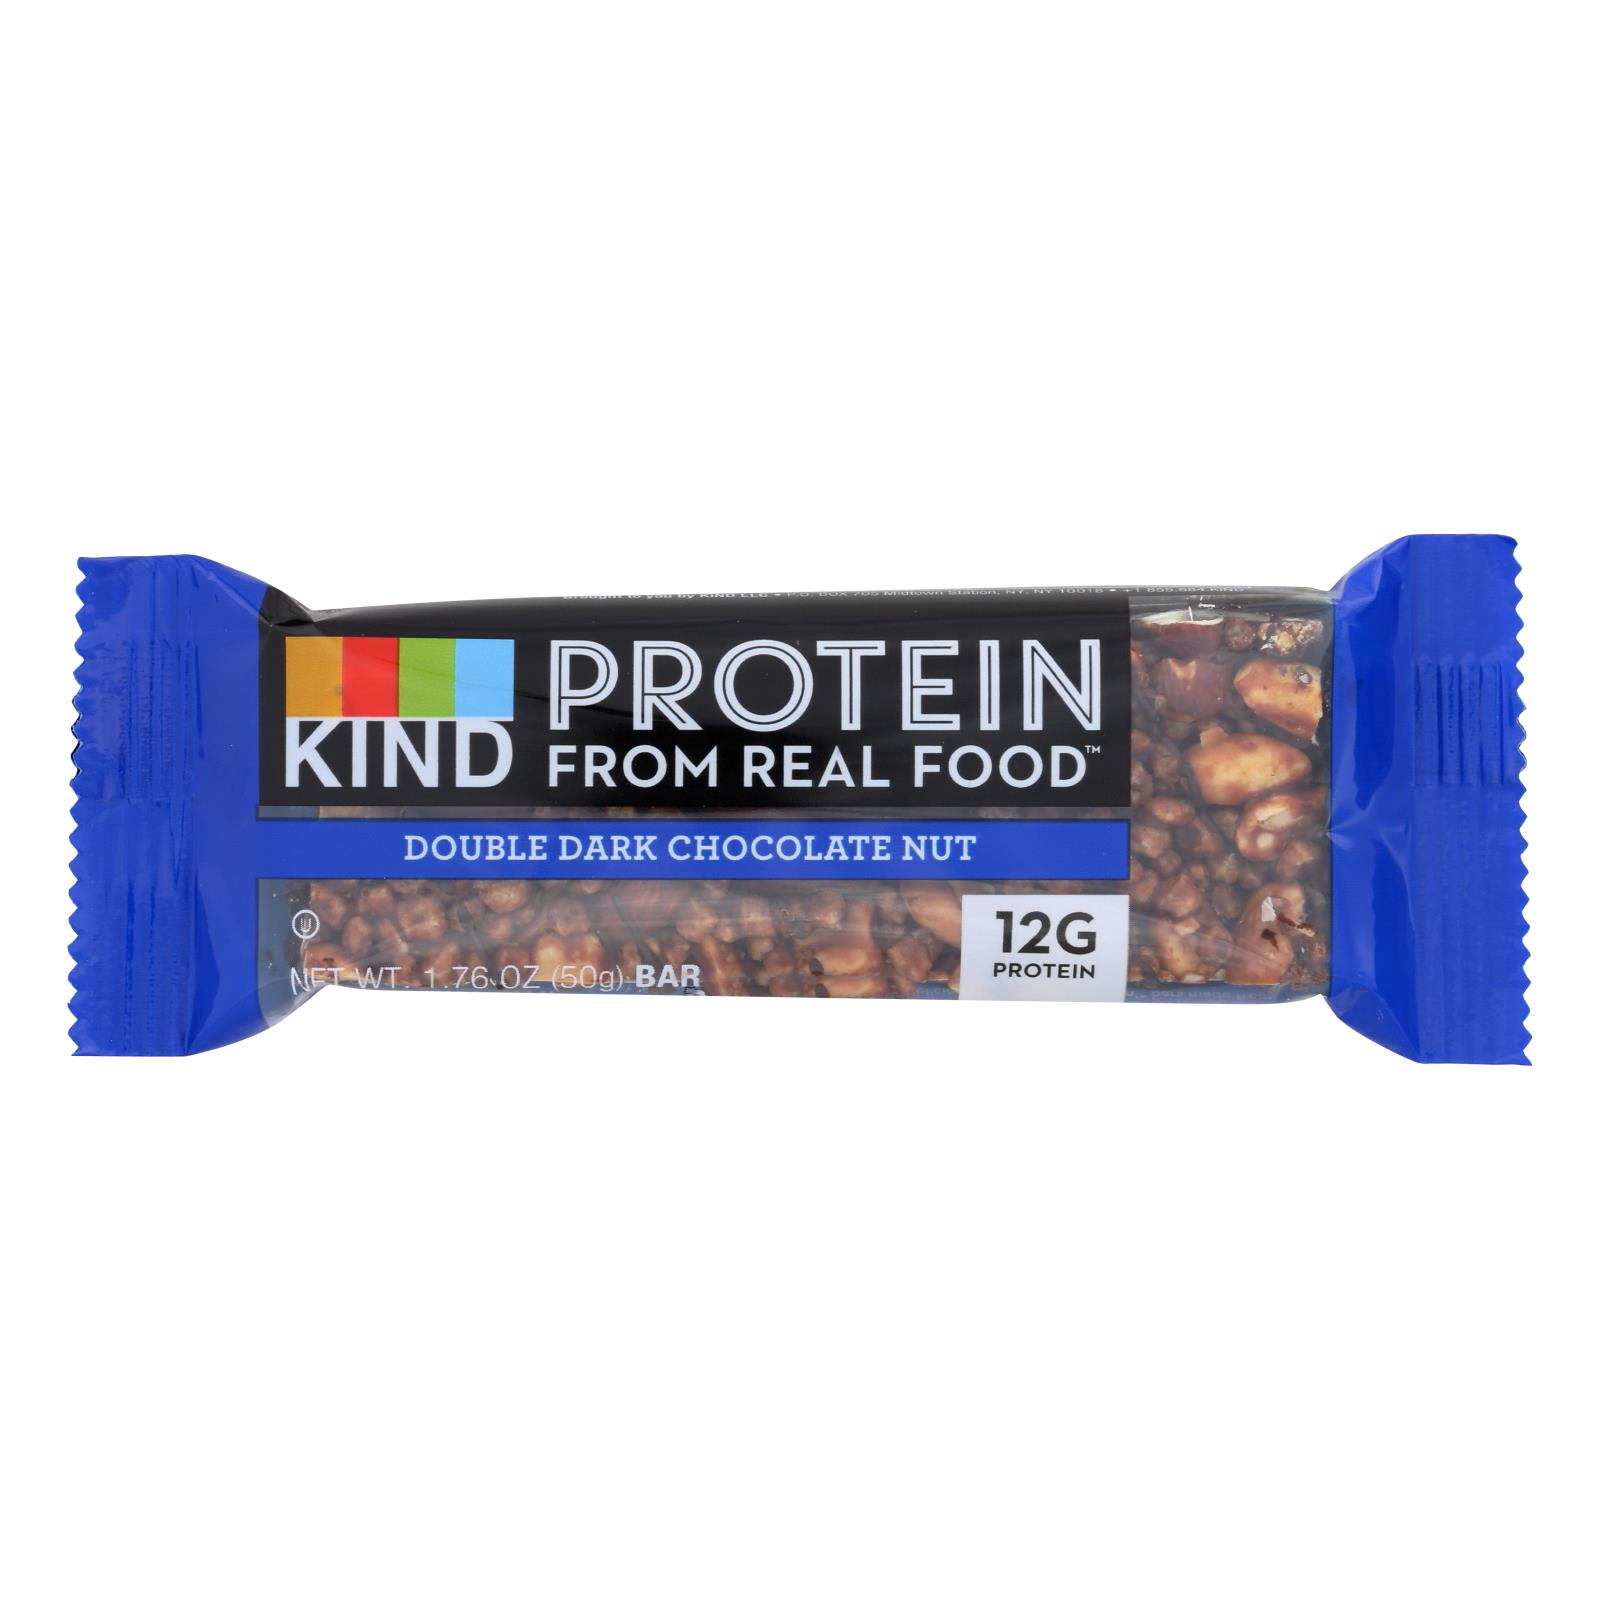 Kind Double Dark Chocolate Nut Protein Bars - 12개 묶음상품 - 1.76 OZ